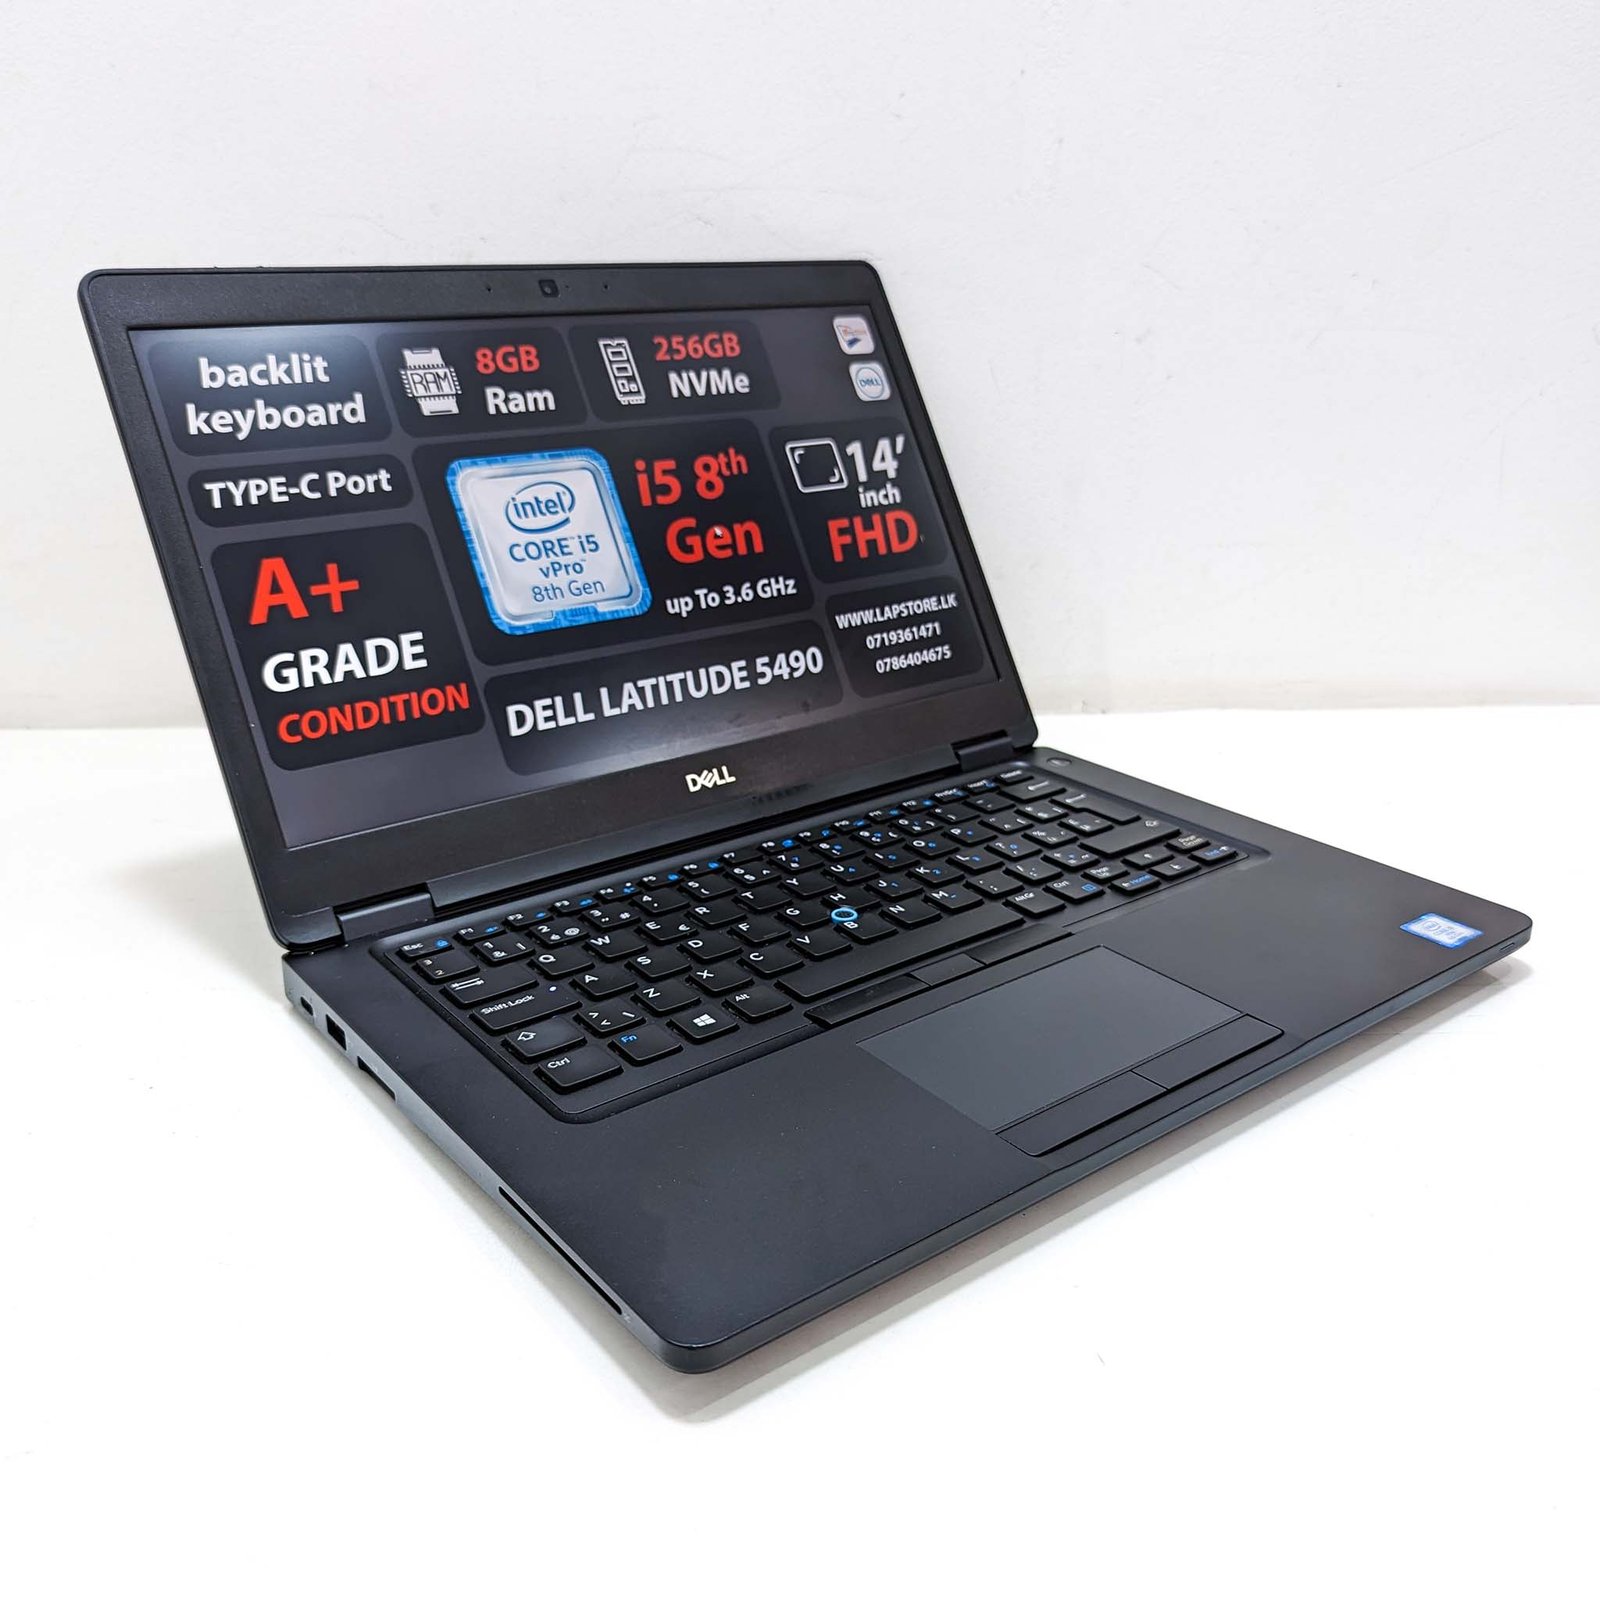 Dell (New) i5 8th Gen – E-5490 | 256GB + 8GB RAM Laptops